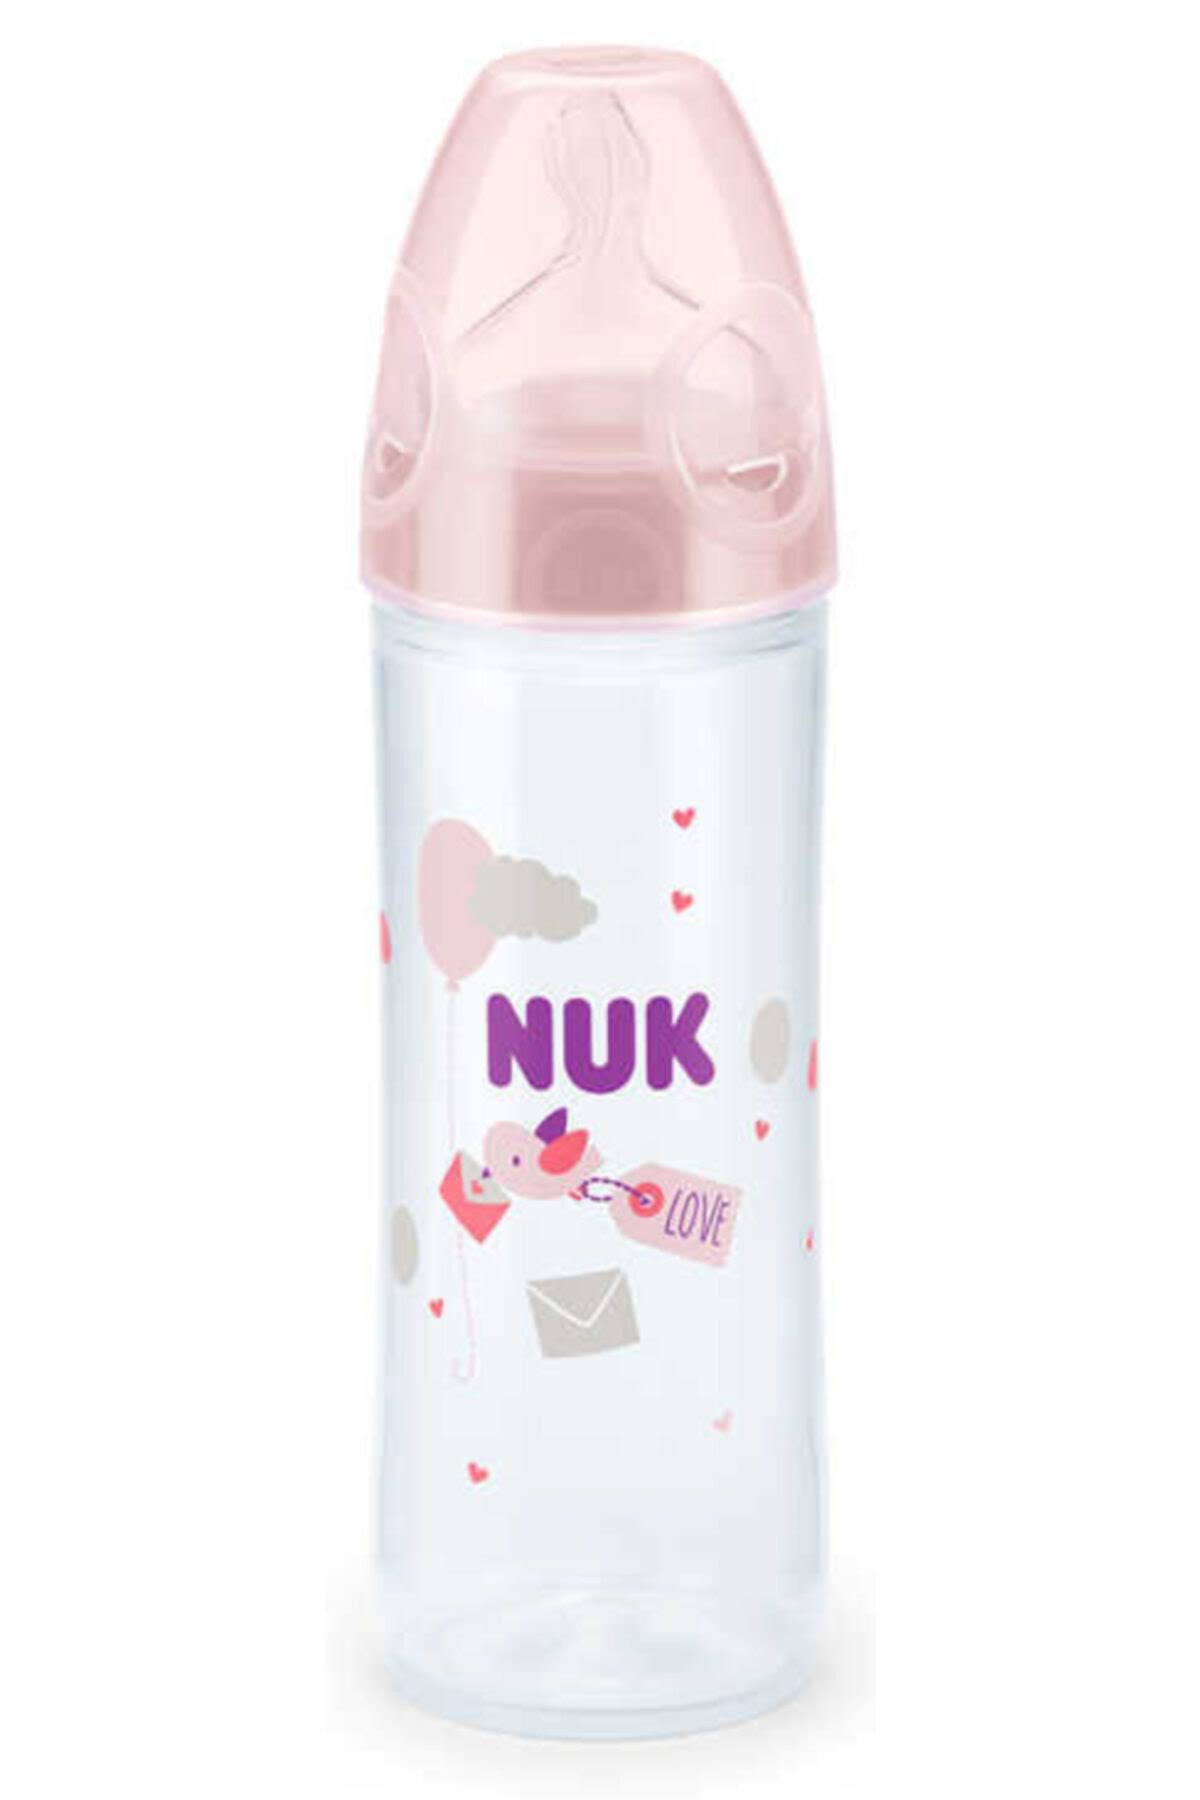 Nuk My Love Feeding Bottle - 250ml, 6-18 Months